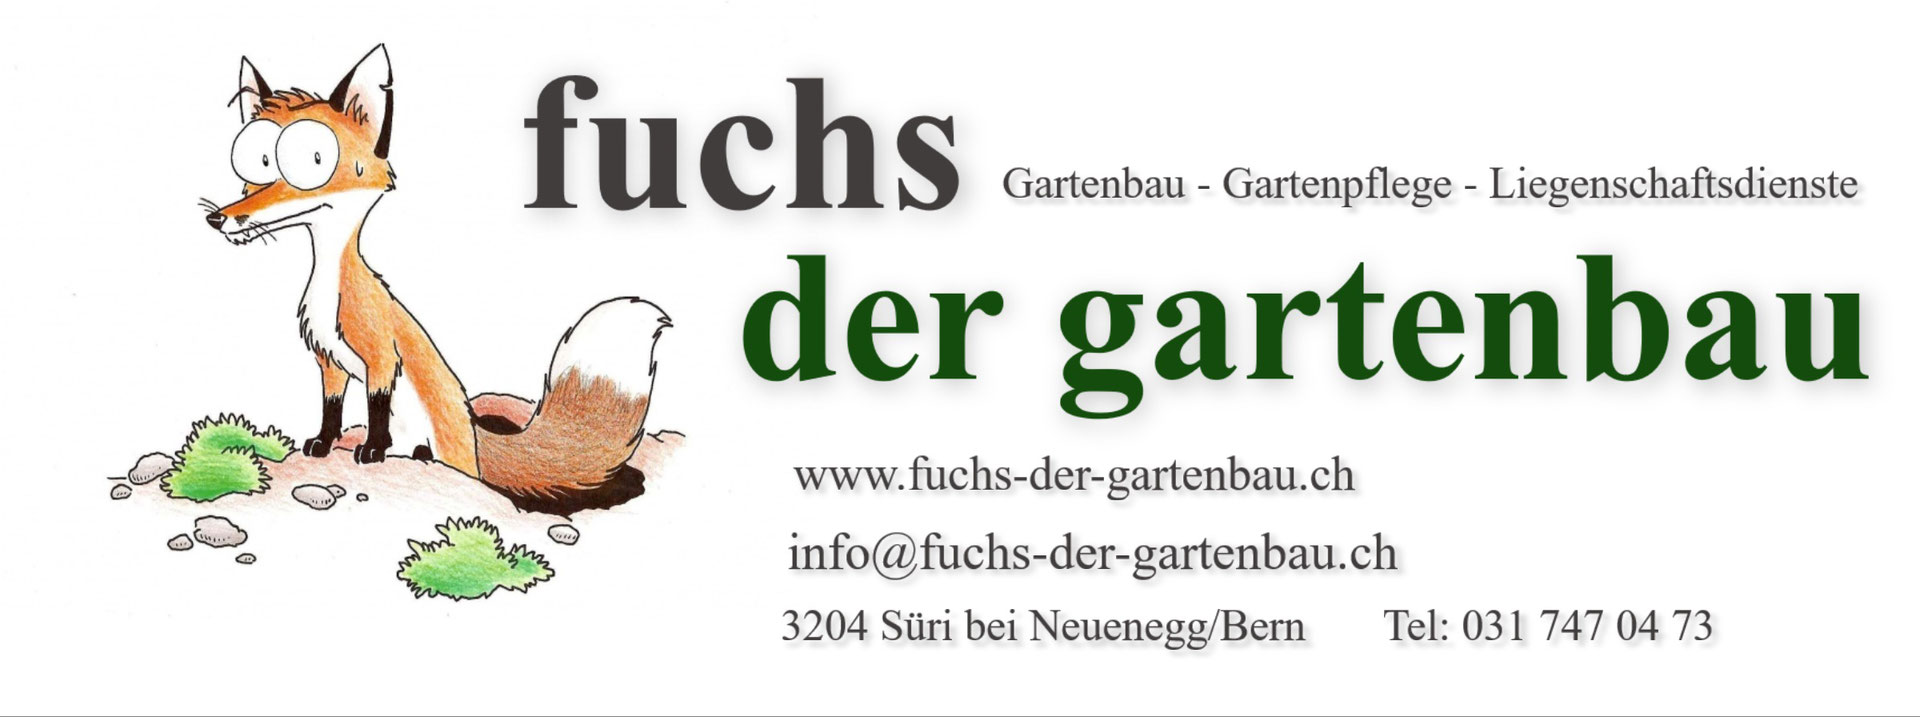 (c) Fuchs-der-gartenbau.ch